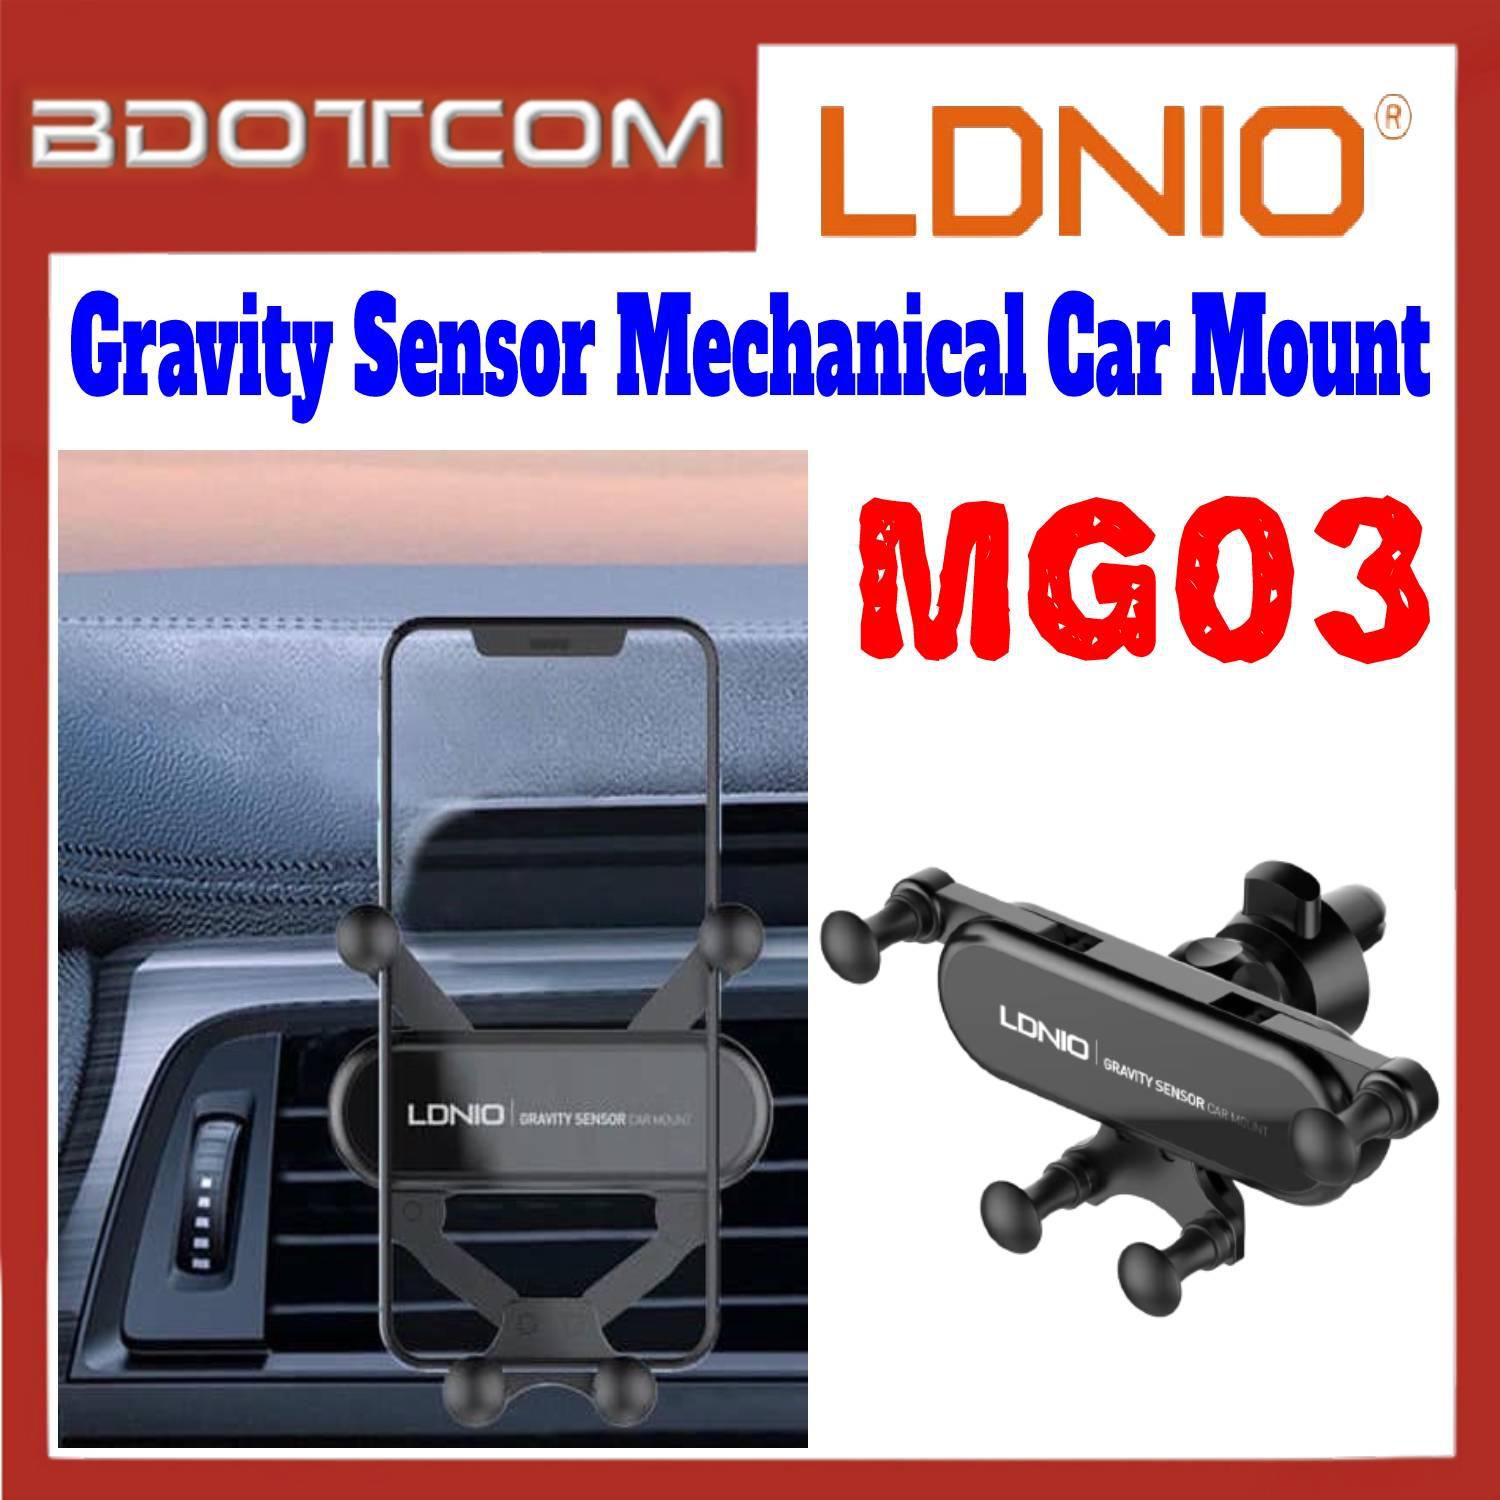 LDNIO MG03 Gravity Sensor Mechanical Air Vent Car Mount Phone Holder